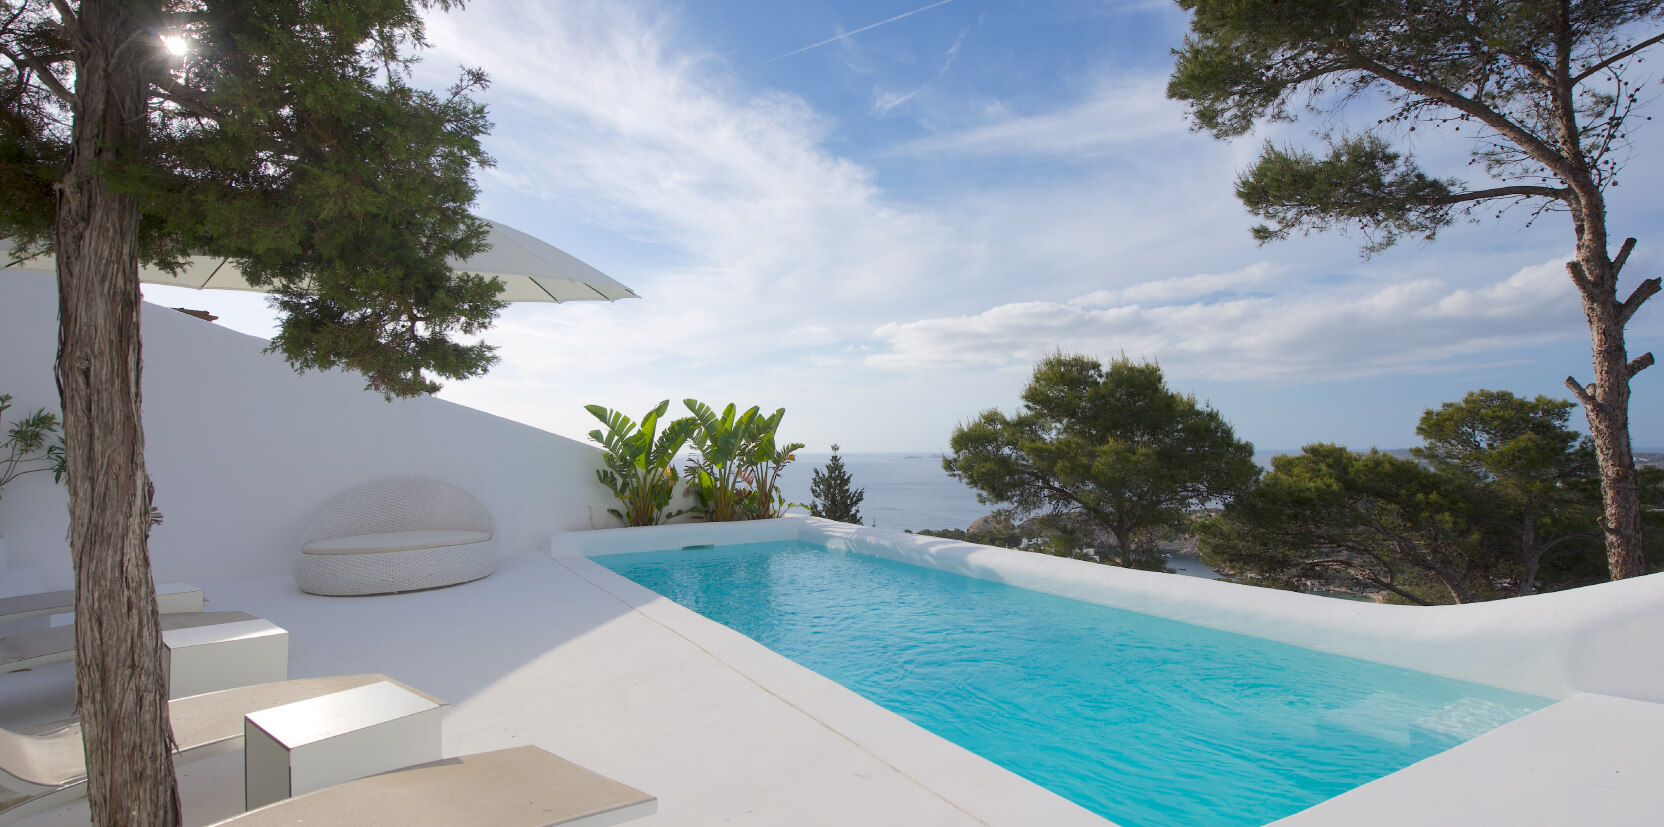 JAMES the BnB Butler full service villa rental & yacht charter Ibiza